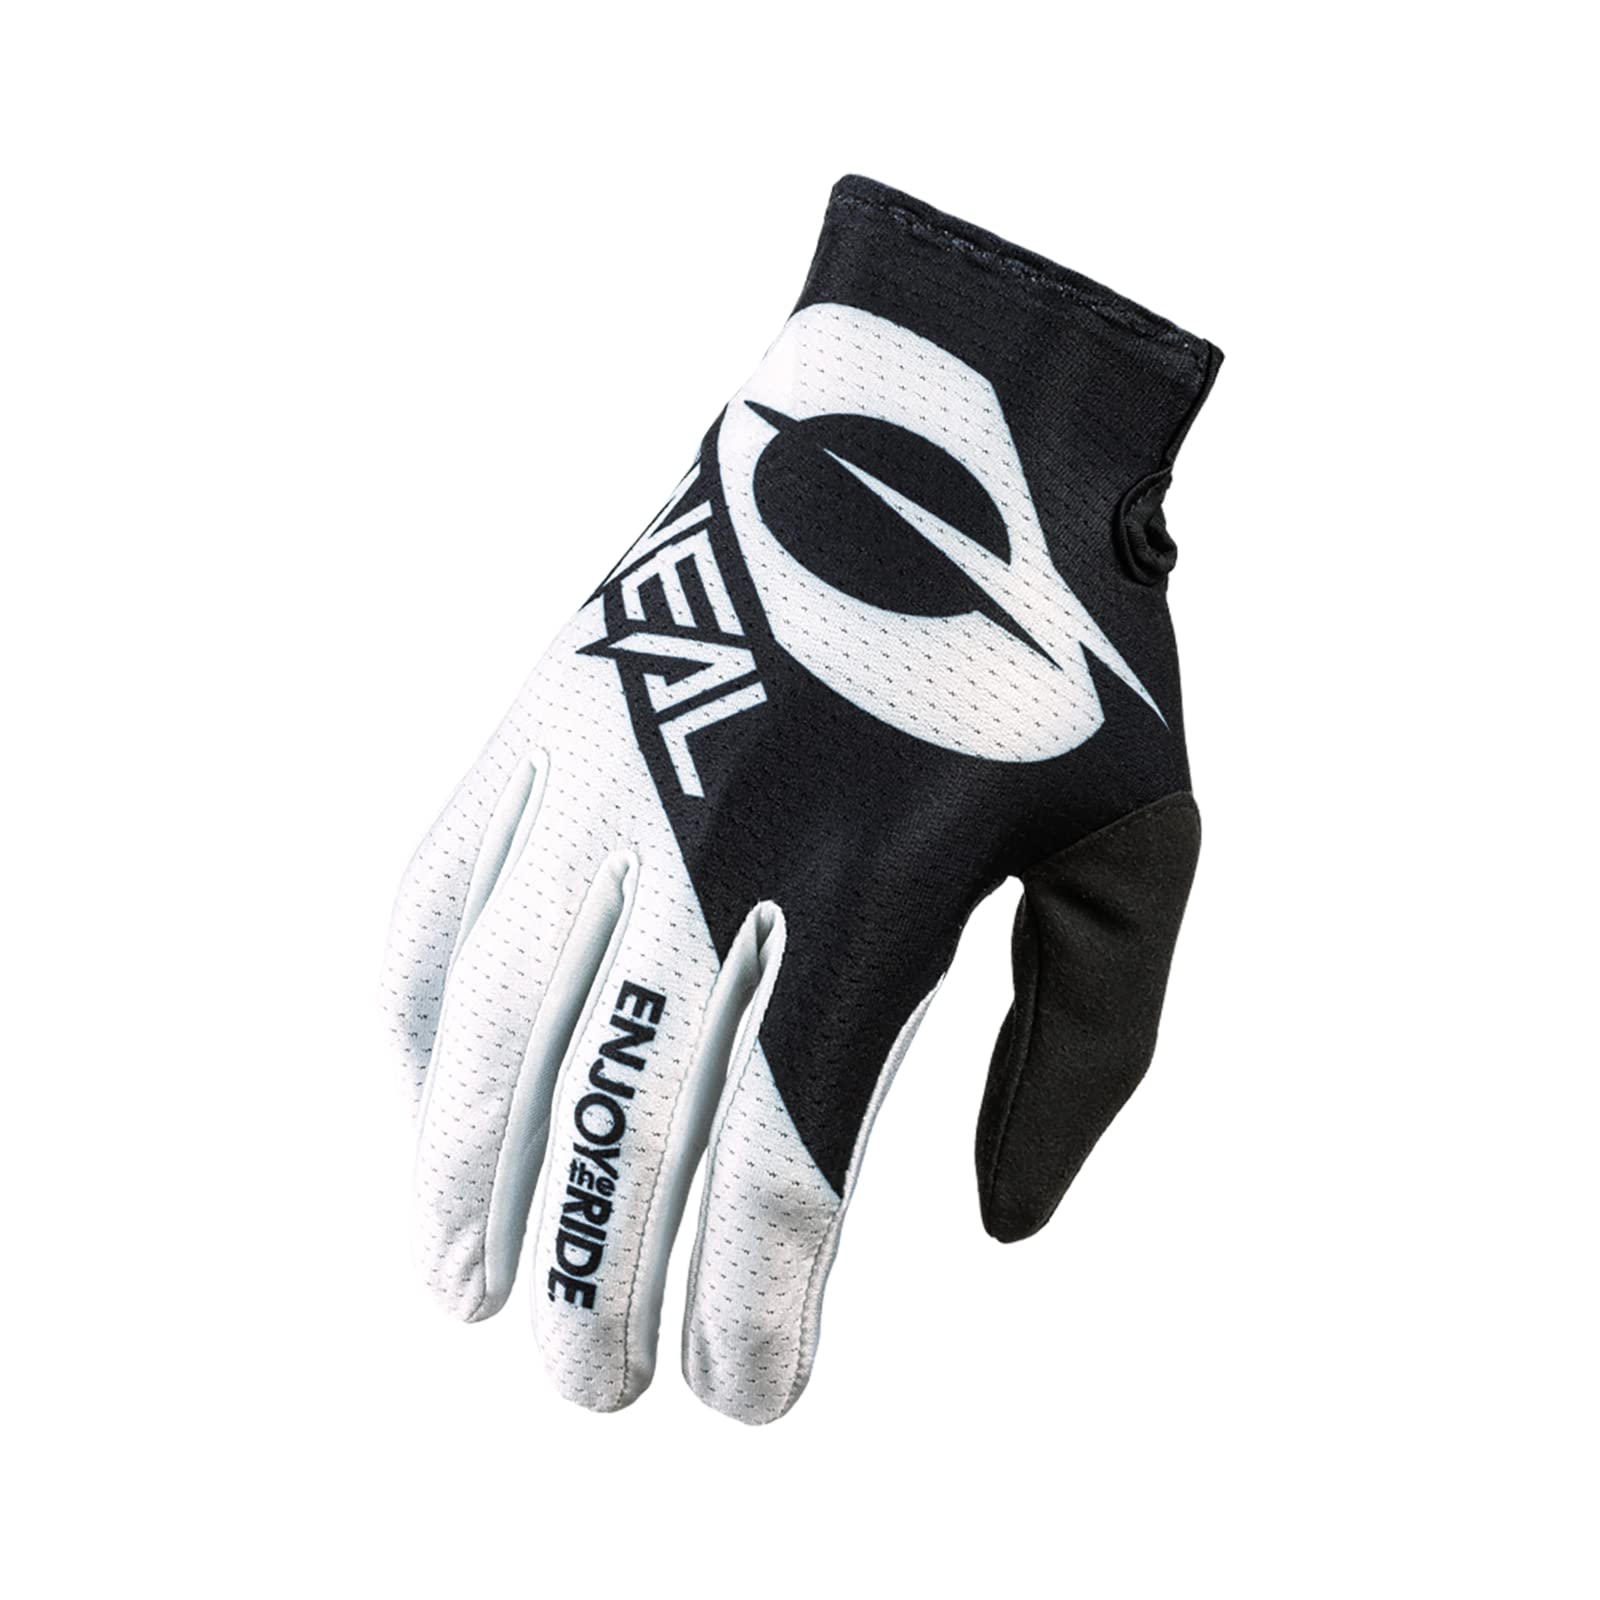 O'NEAL | Fahrrad- & Motocross-Handschuhe | MX MTB DH FR Downhill Freeride | Langlebige, Flexible Materialien, belüftete Handoberseite | Matrix Glove | Erwachsene | Schwarz Weiß | Größe S von O'NEAL